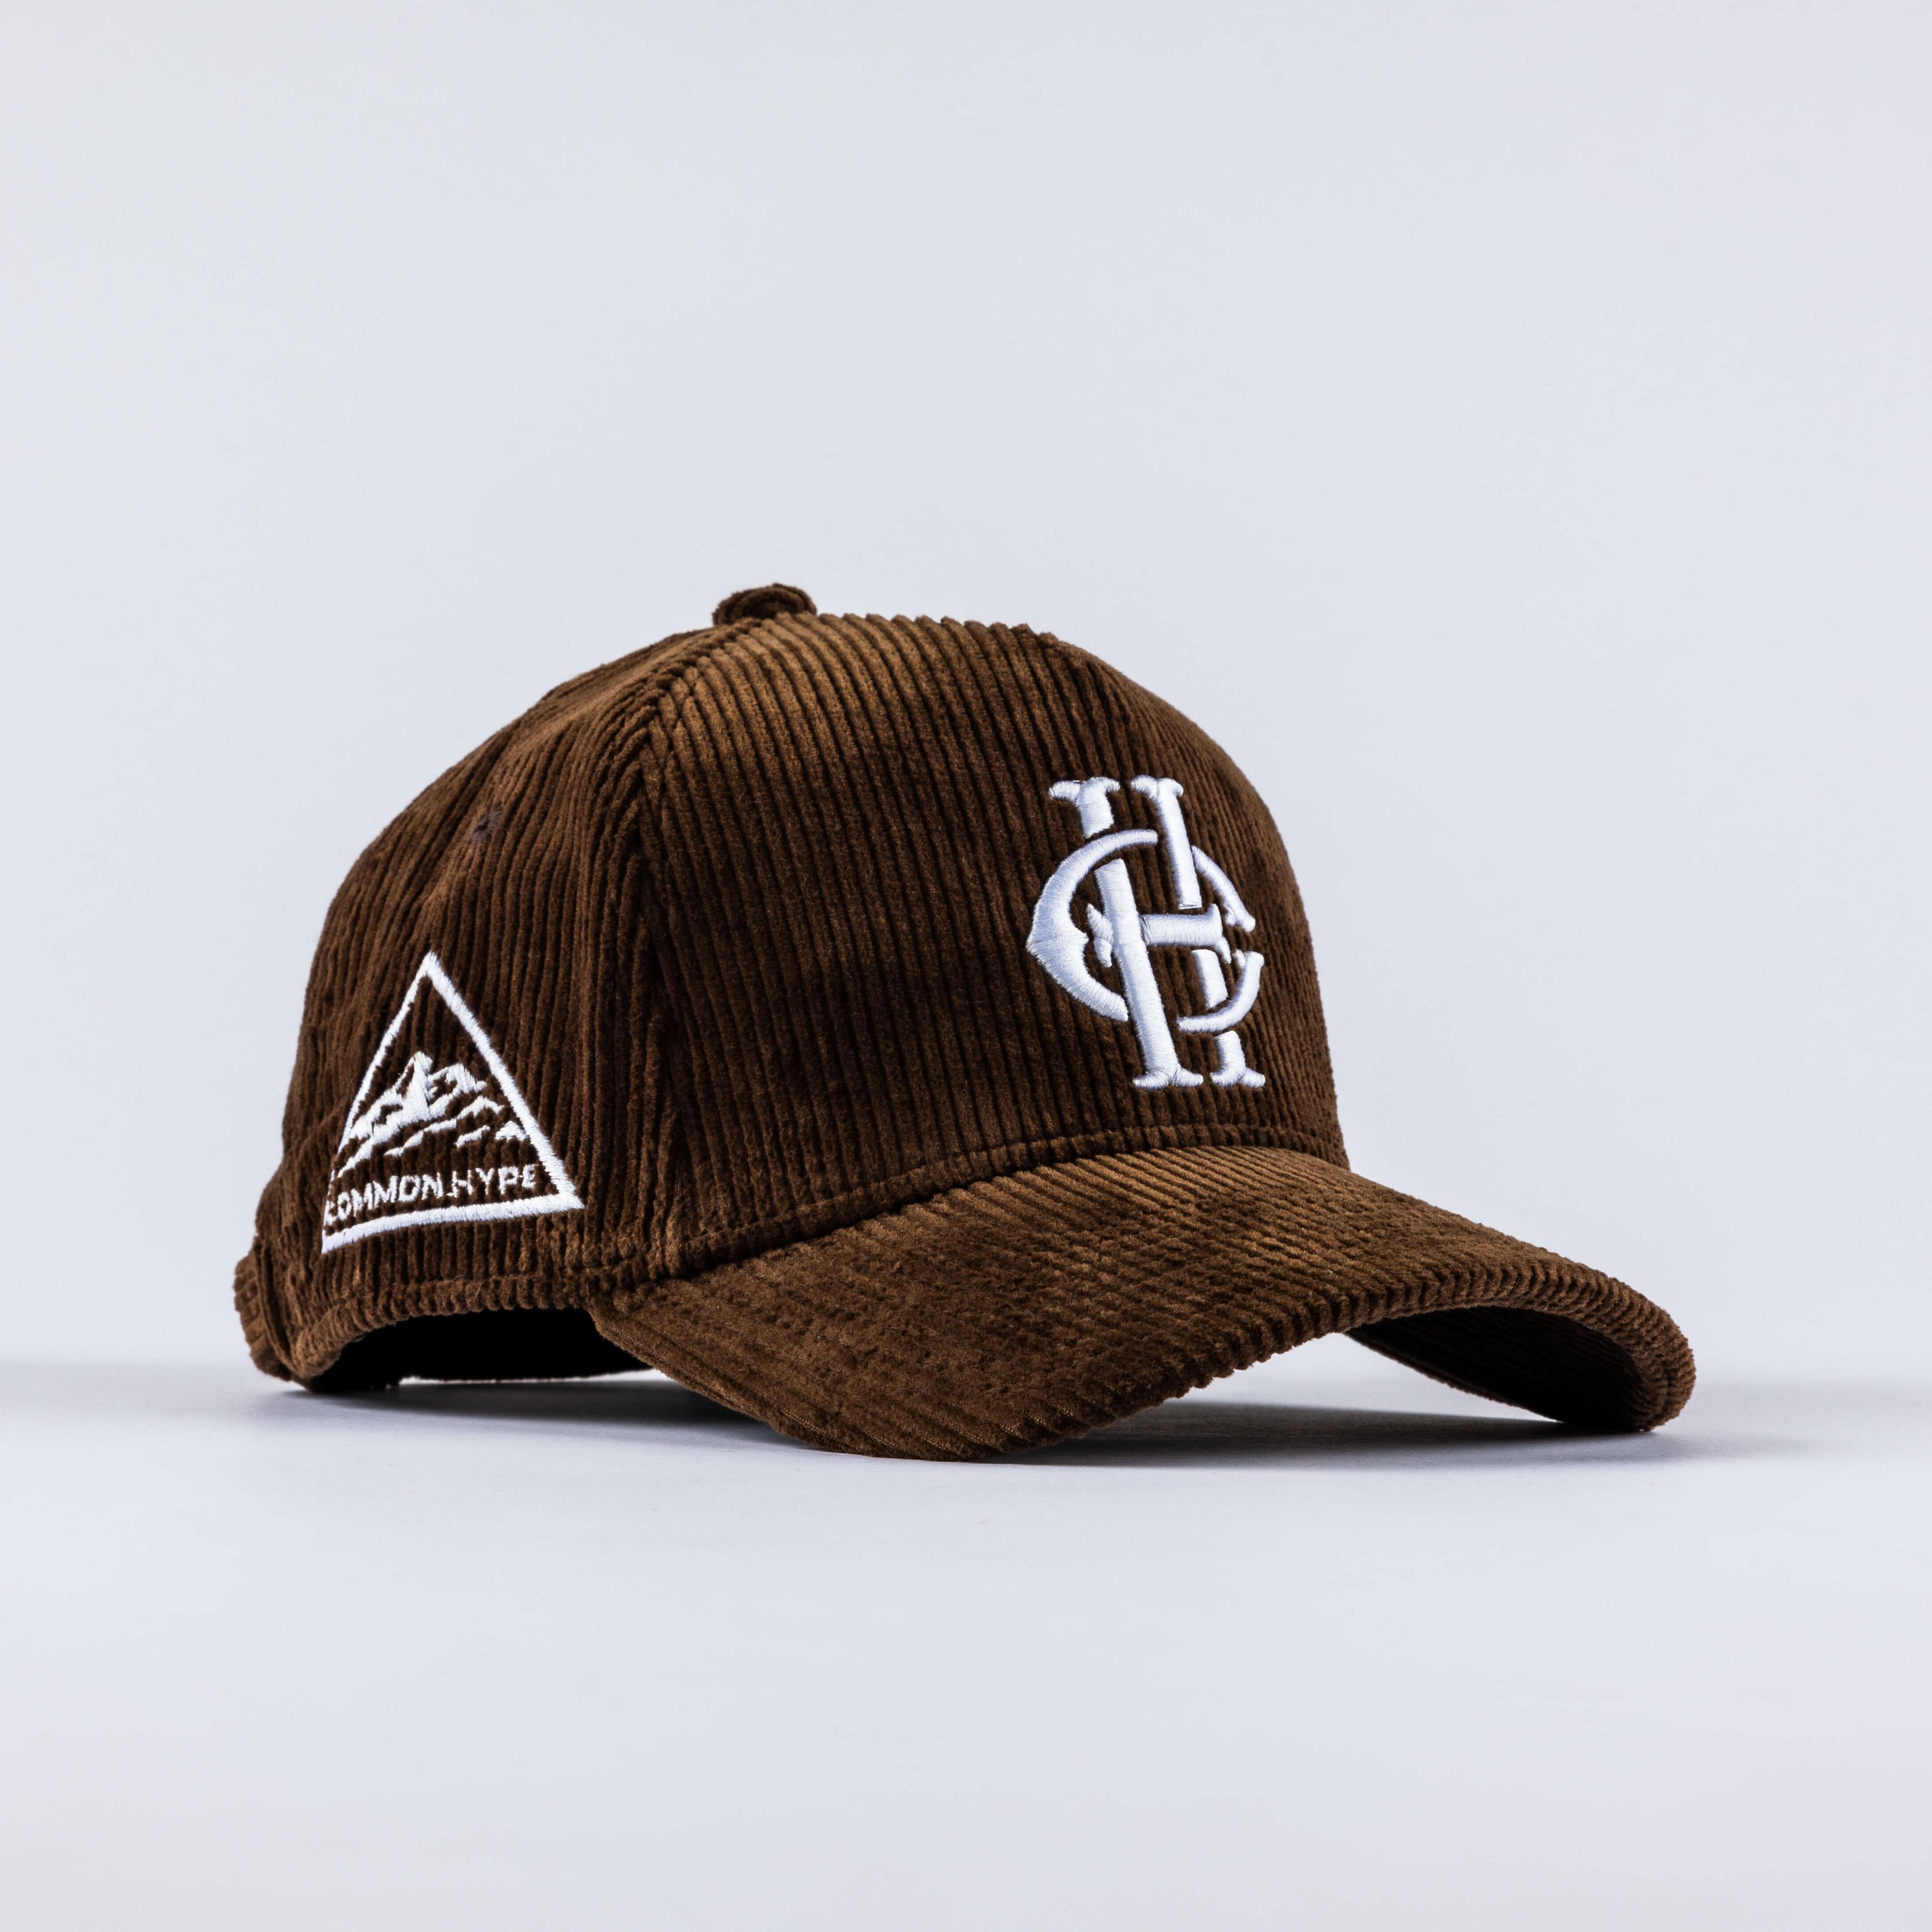 Common Hype Corduroy Brown Hat